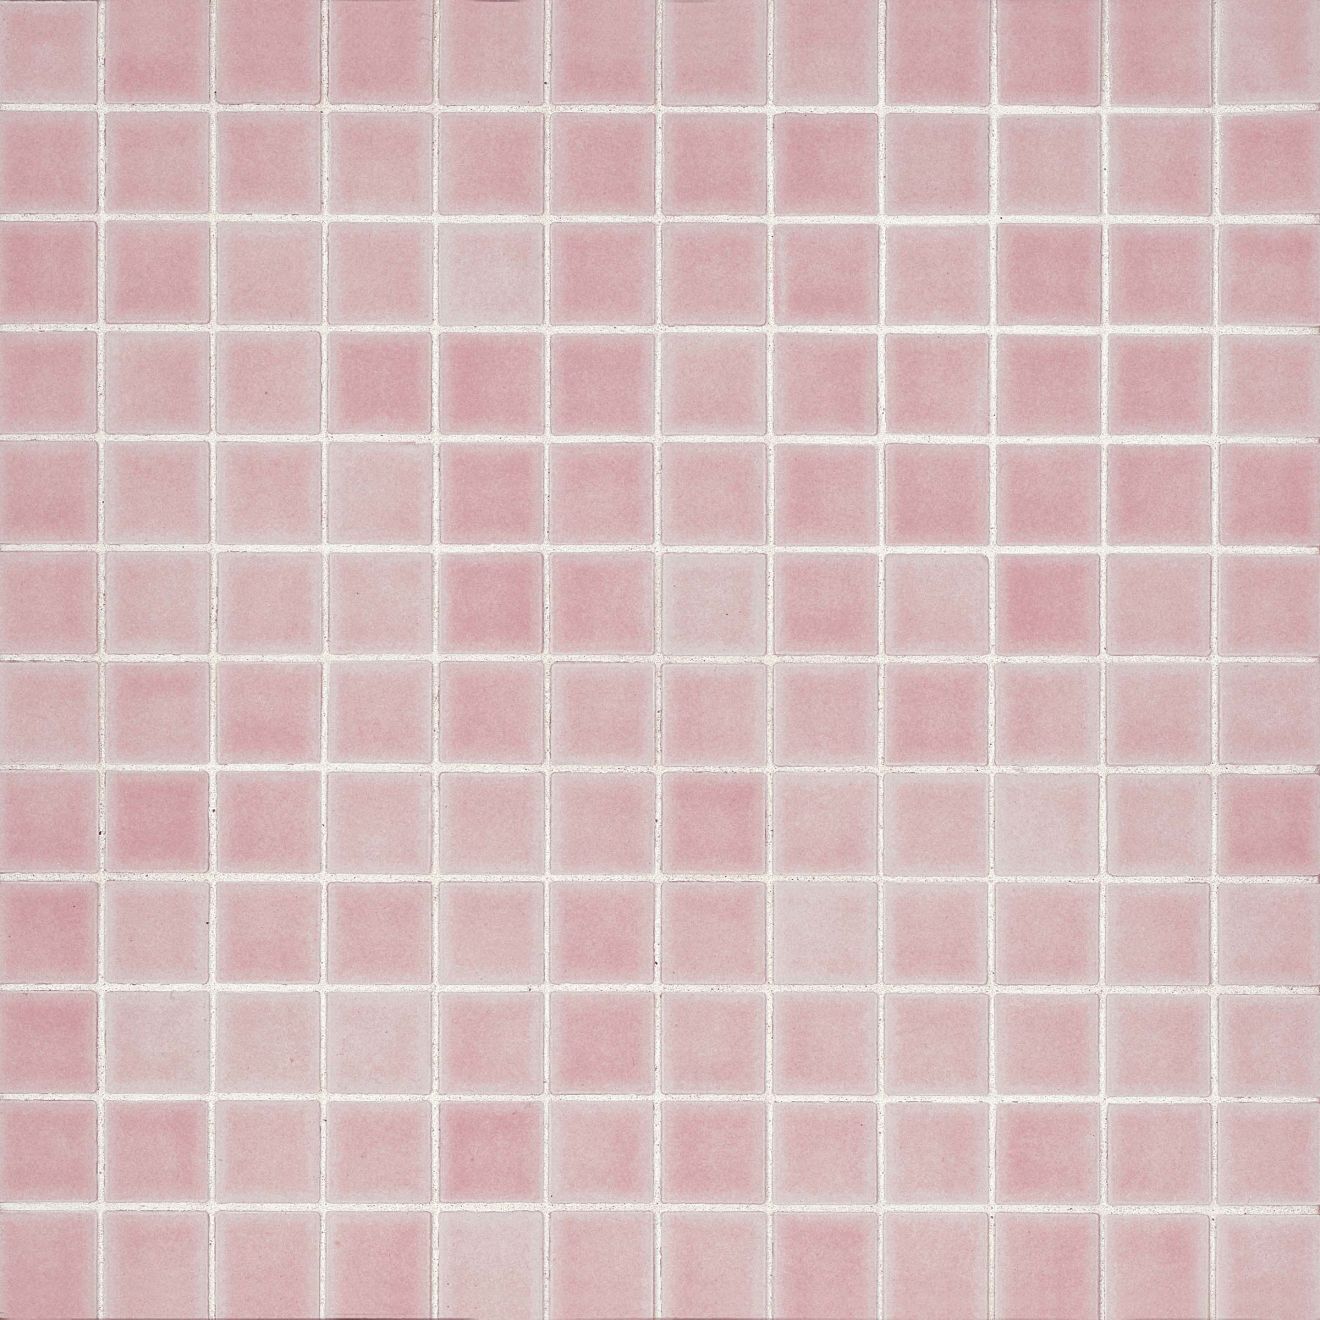 True 1 X 1 Floor Wall Mosaic In Pink Bedrosians Tile Stone